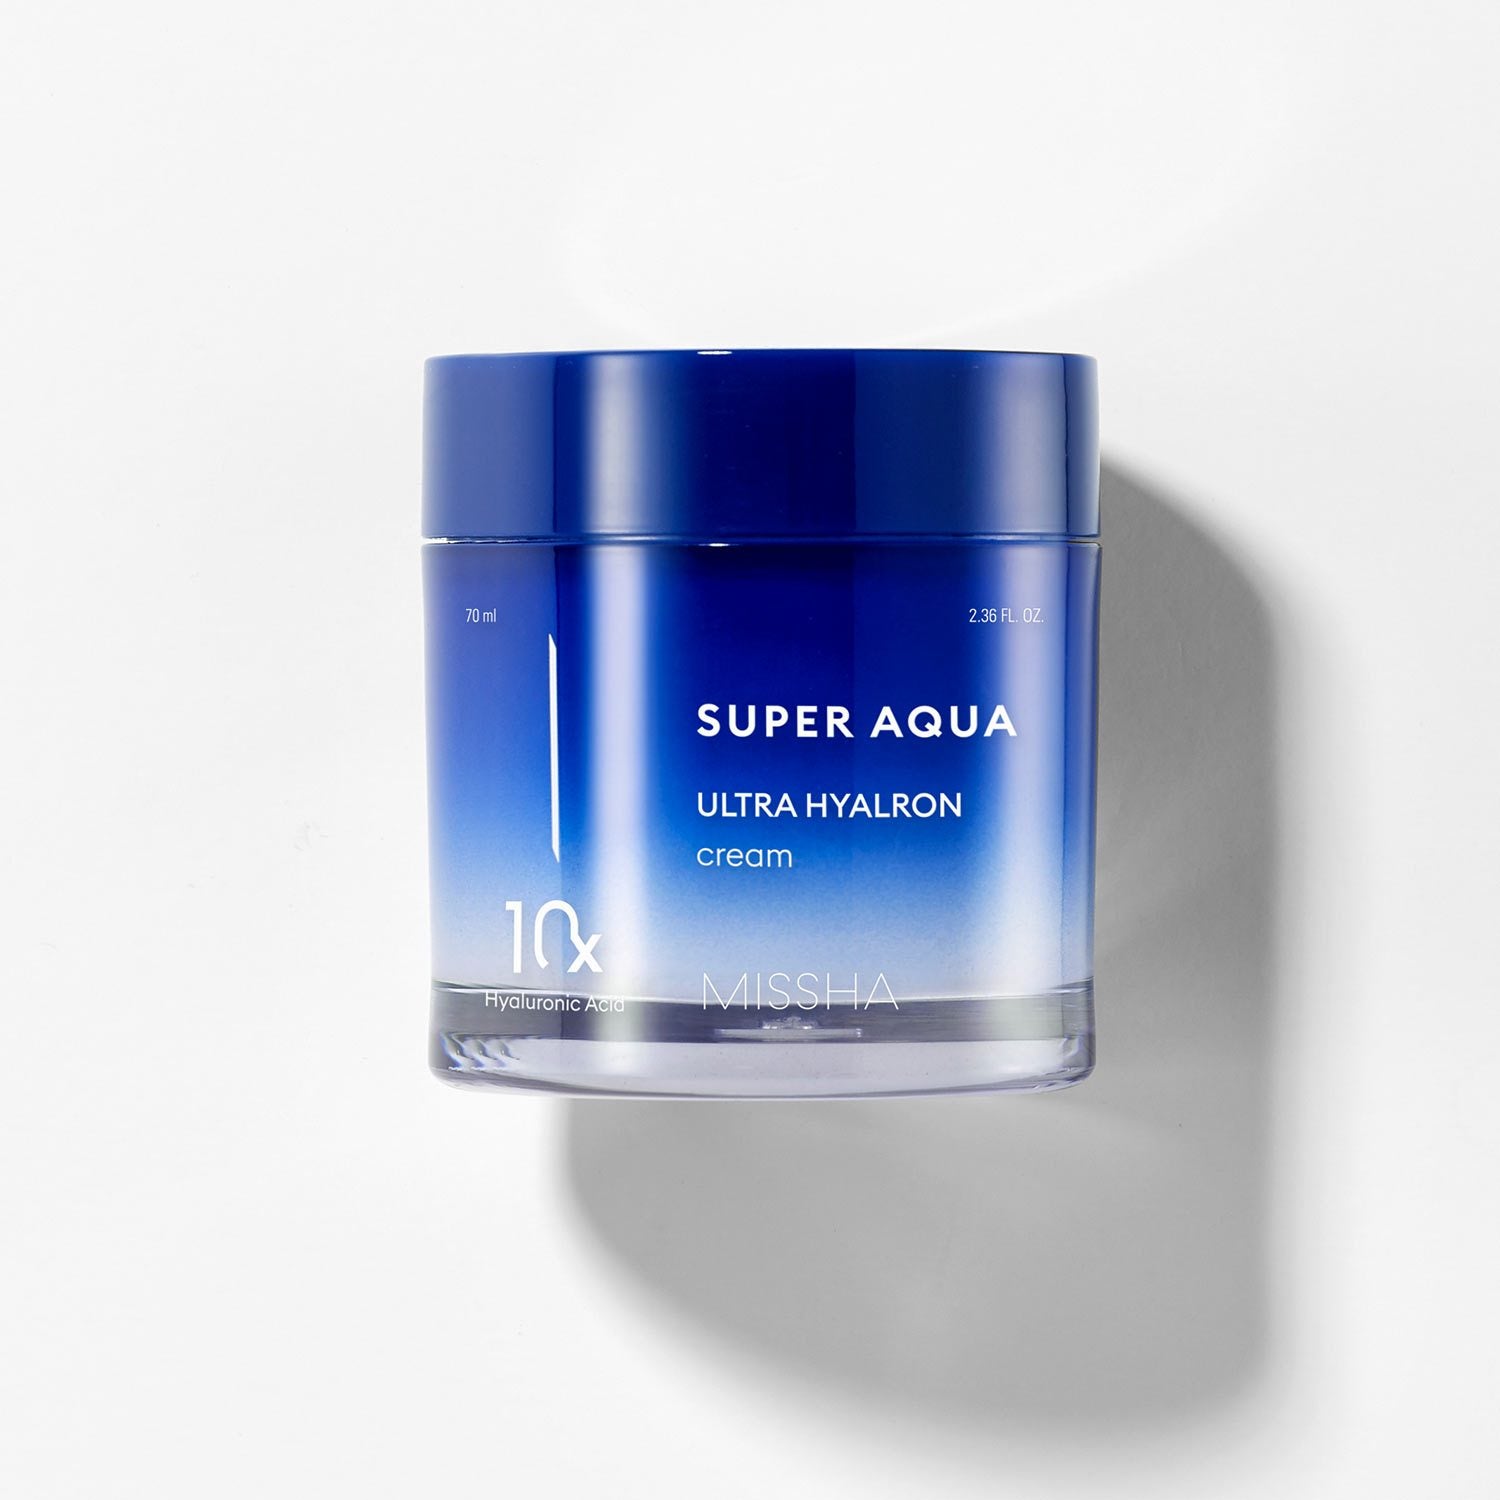 Missha Super Aqua cream